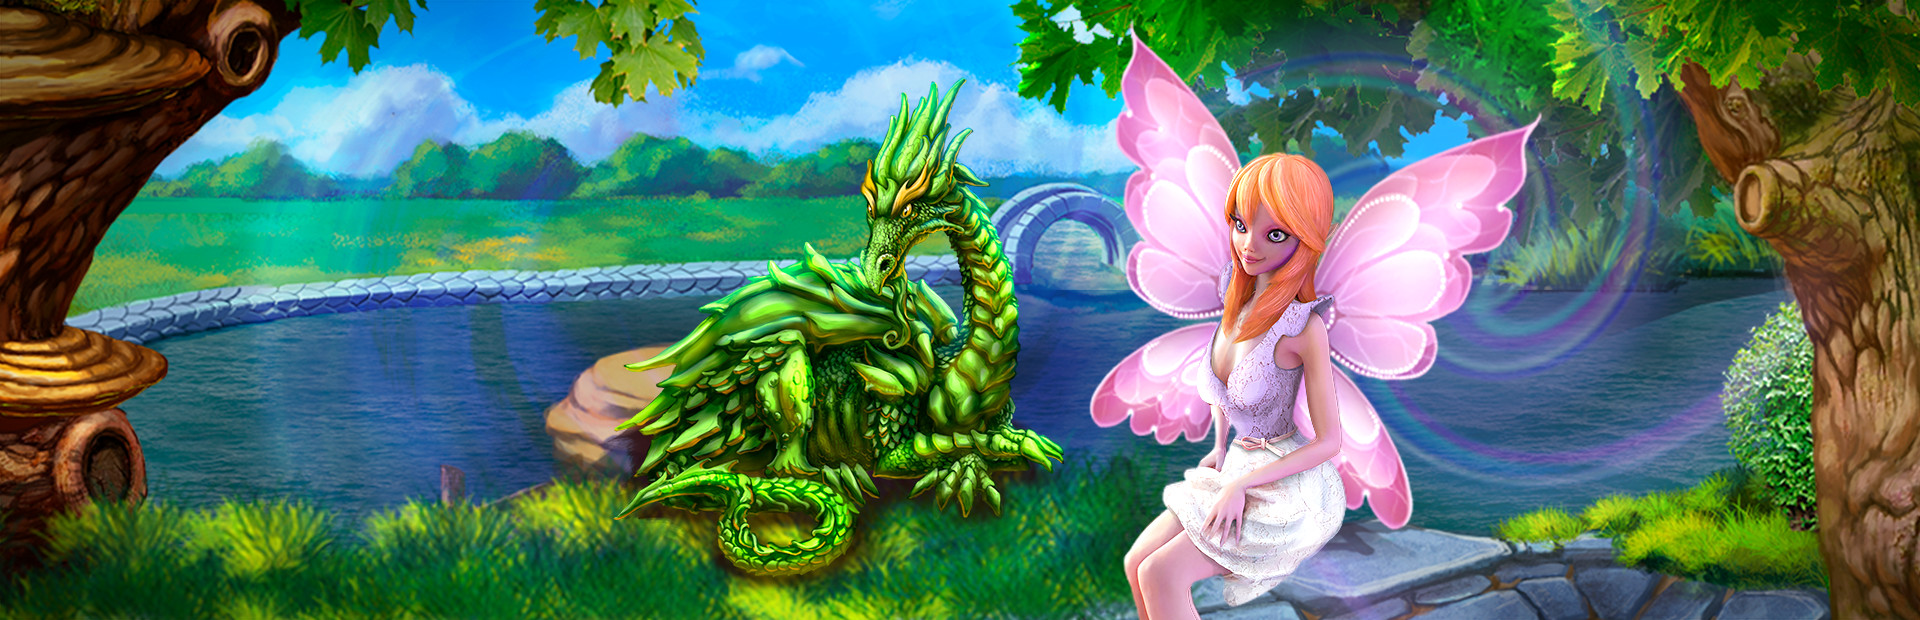 Dreamland Solitaire: Dragon's Fury cover image